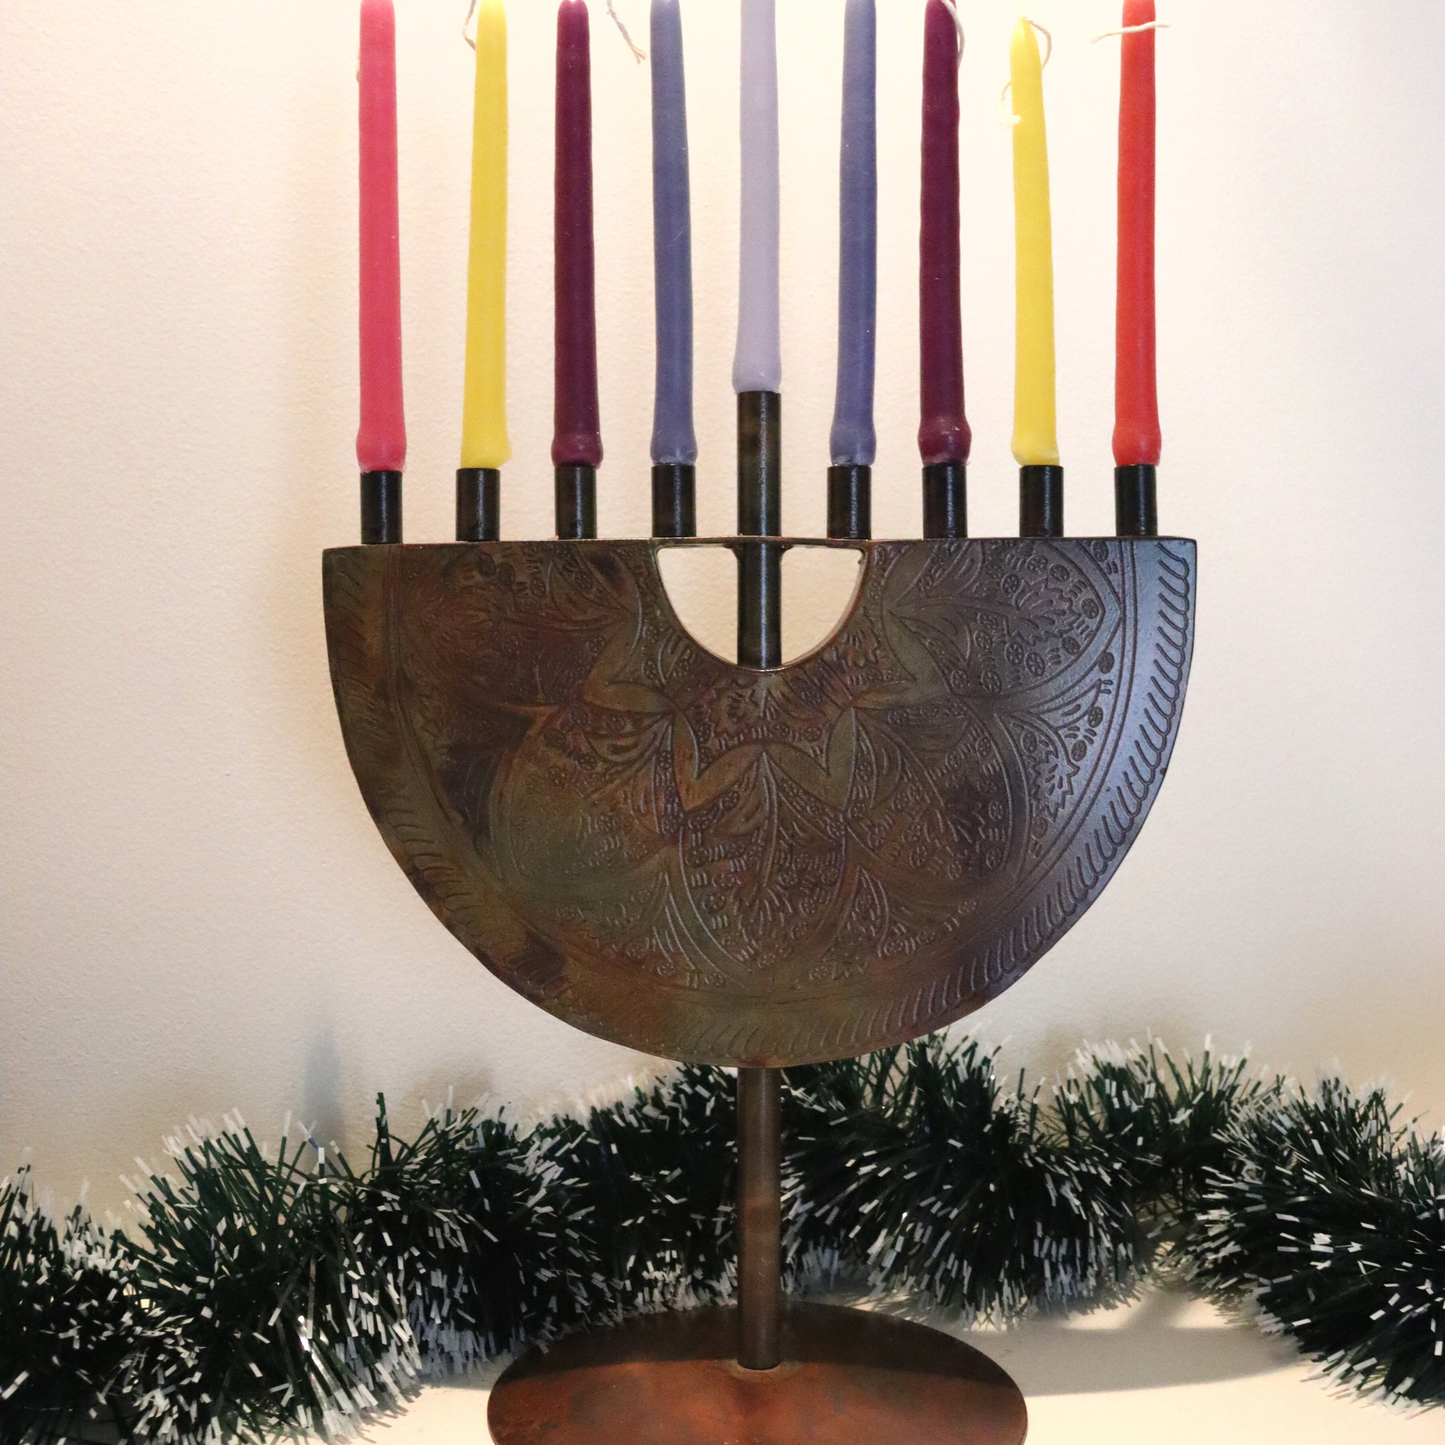 9 Candle Antiqued Iron Menorah Hanukkah Lamp Holder - Chanukah, Jewish, Judaica Home Decor